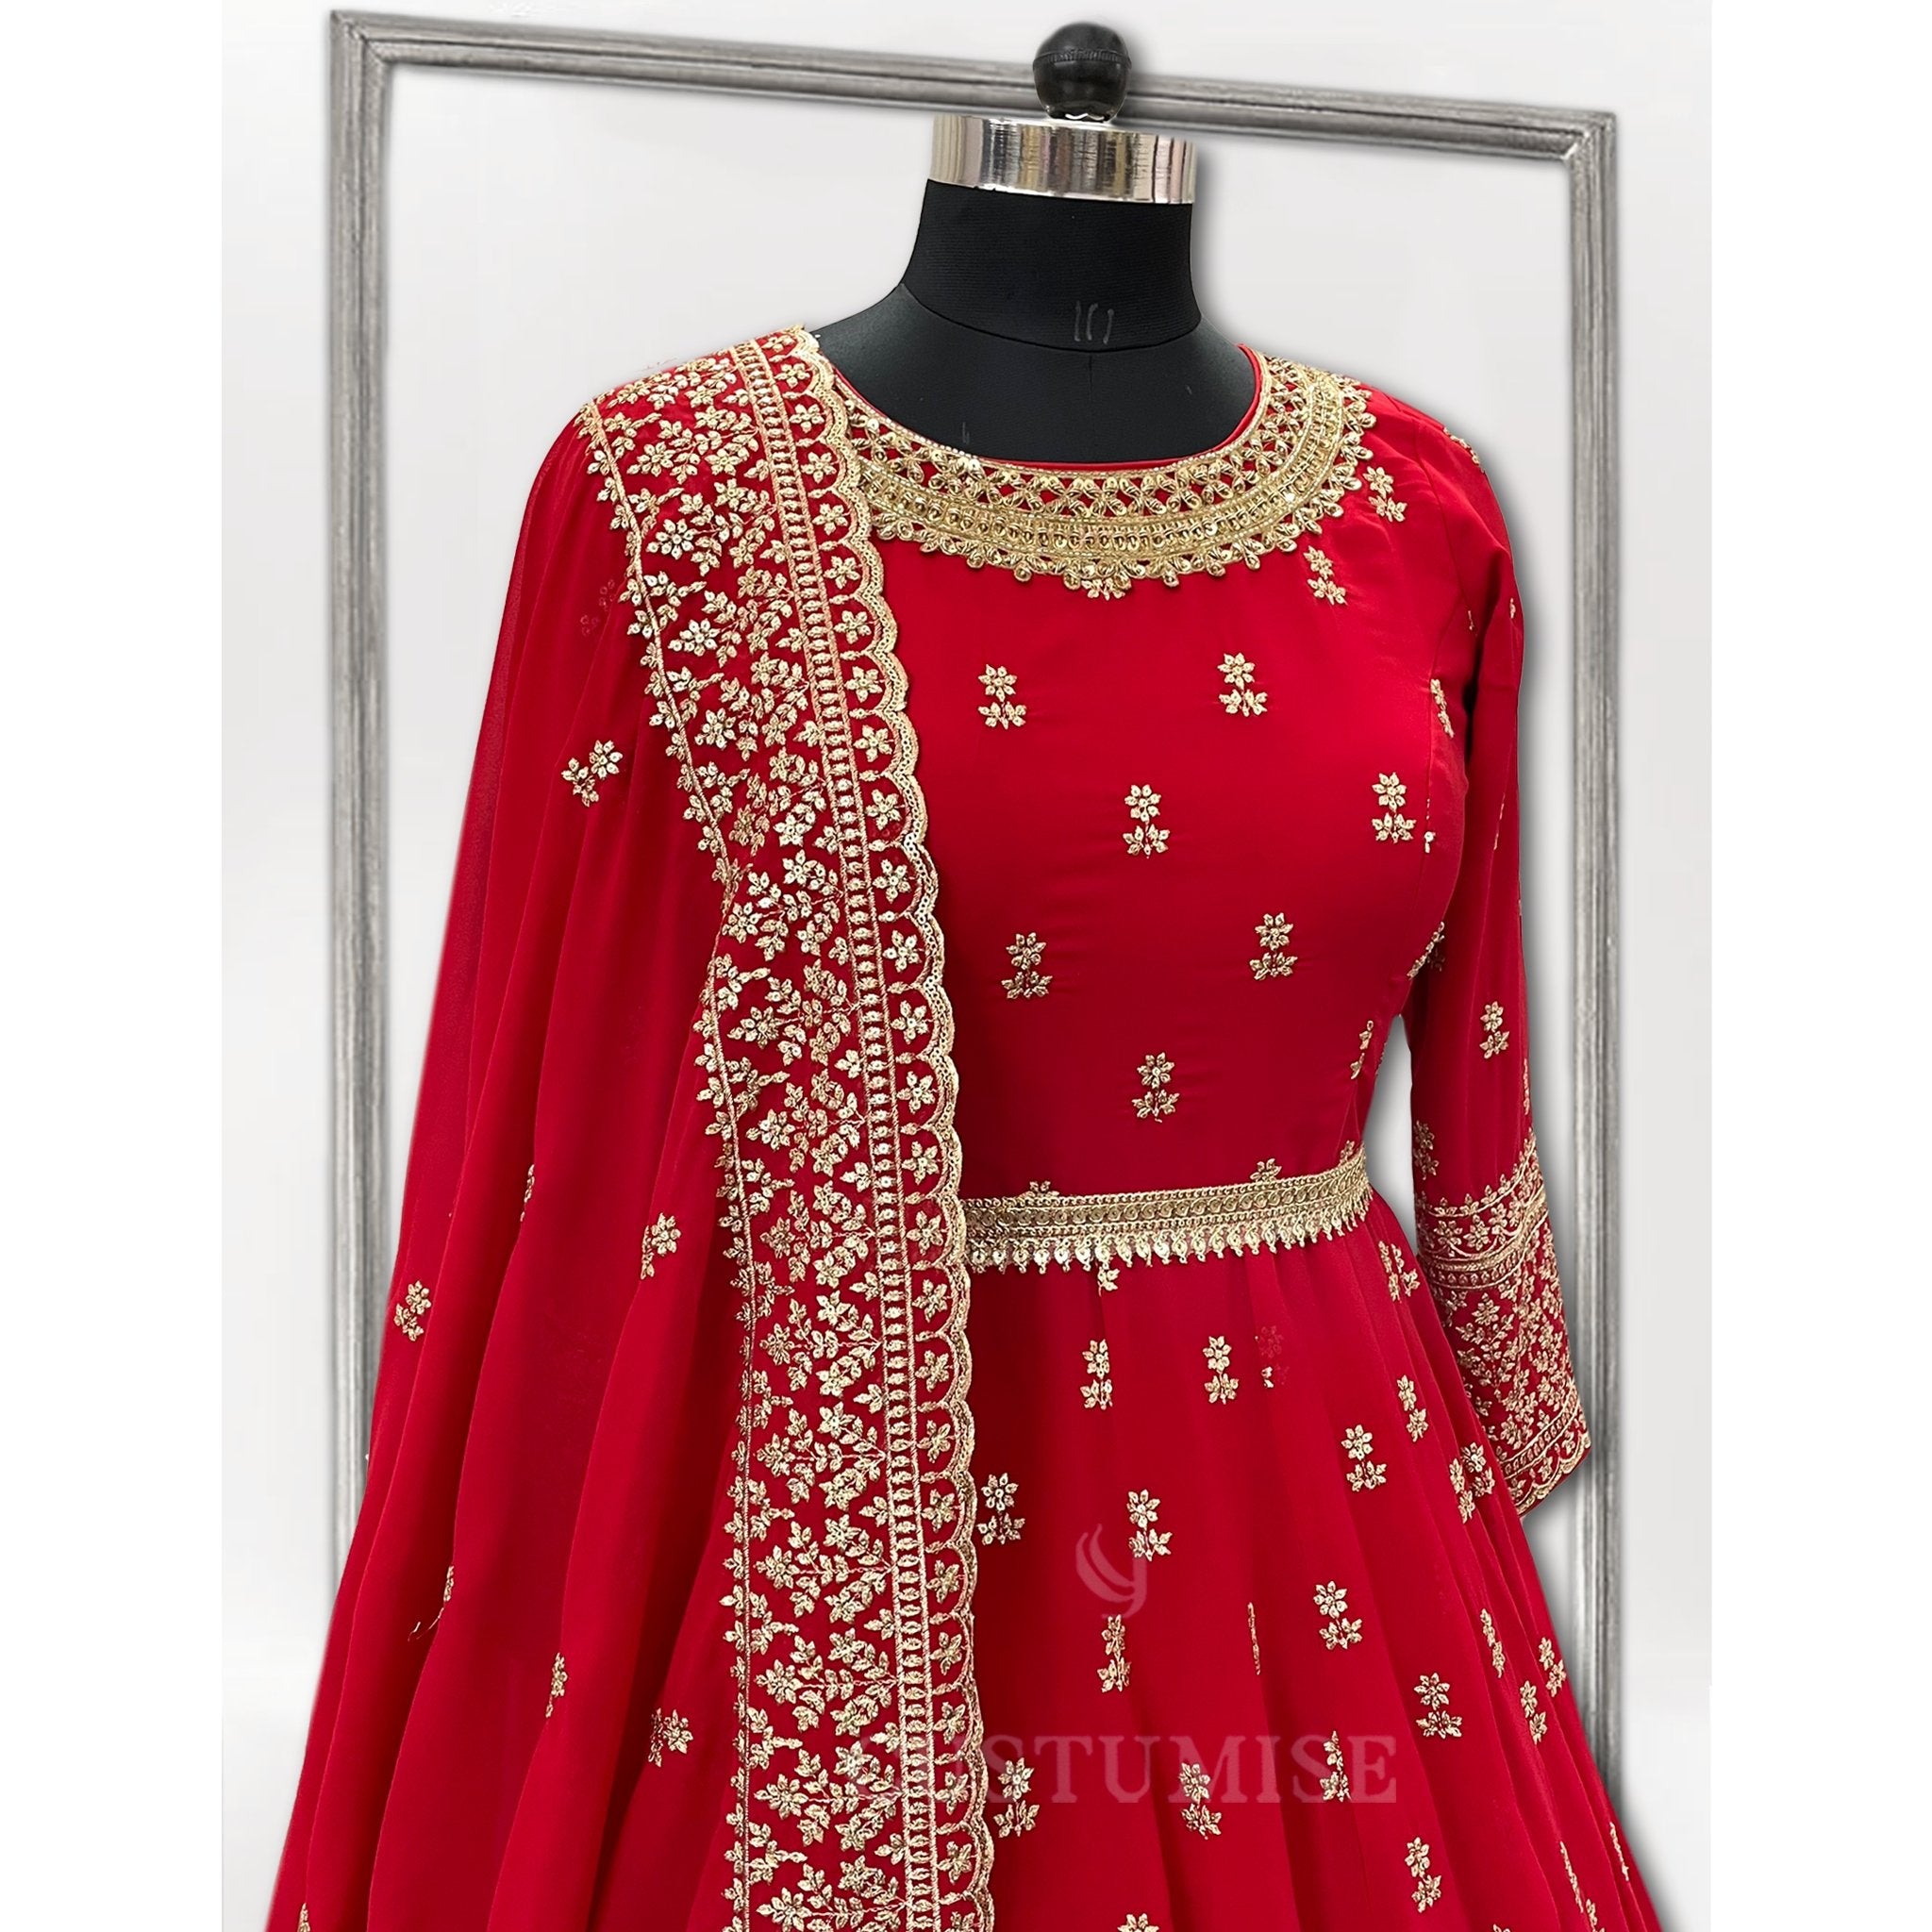 Red embroidered Anarkali lehenga set - Indian Designer Bridal Wedding Outfit